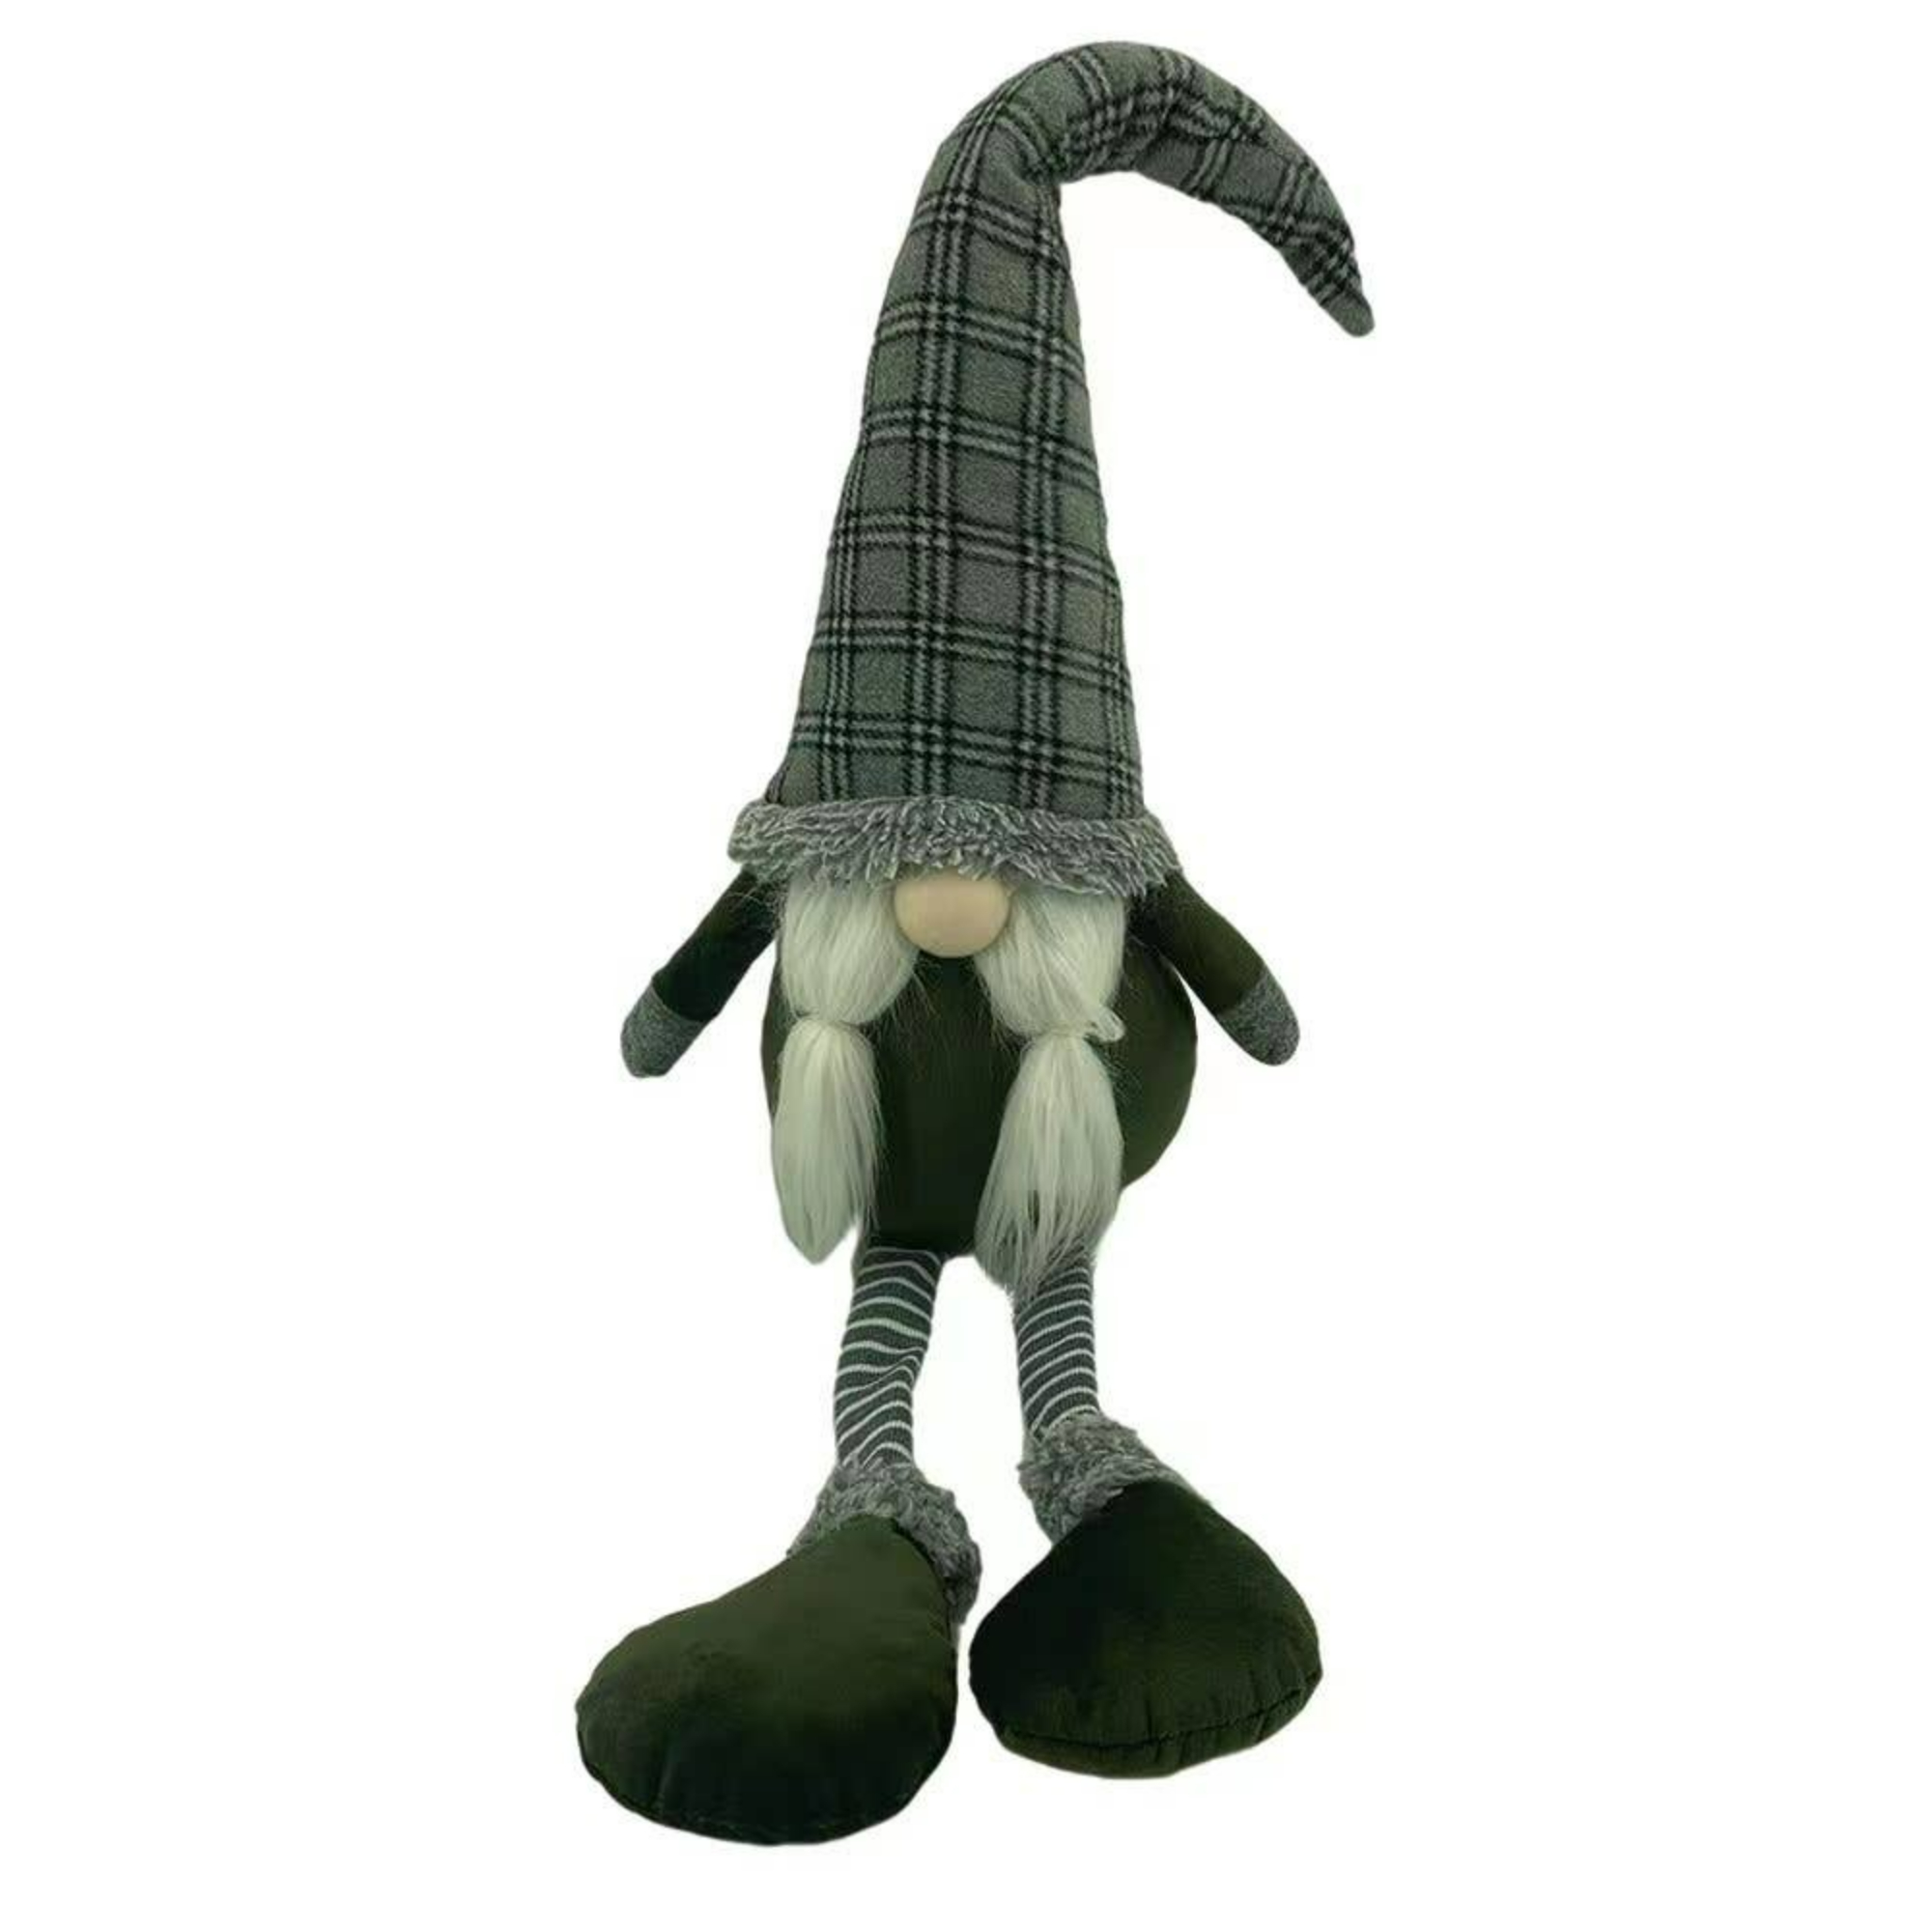 Galt International Plaid Hat Girl Christmas Gnome Figurine - 32.5" - Gray and Green